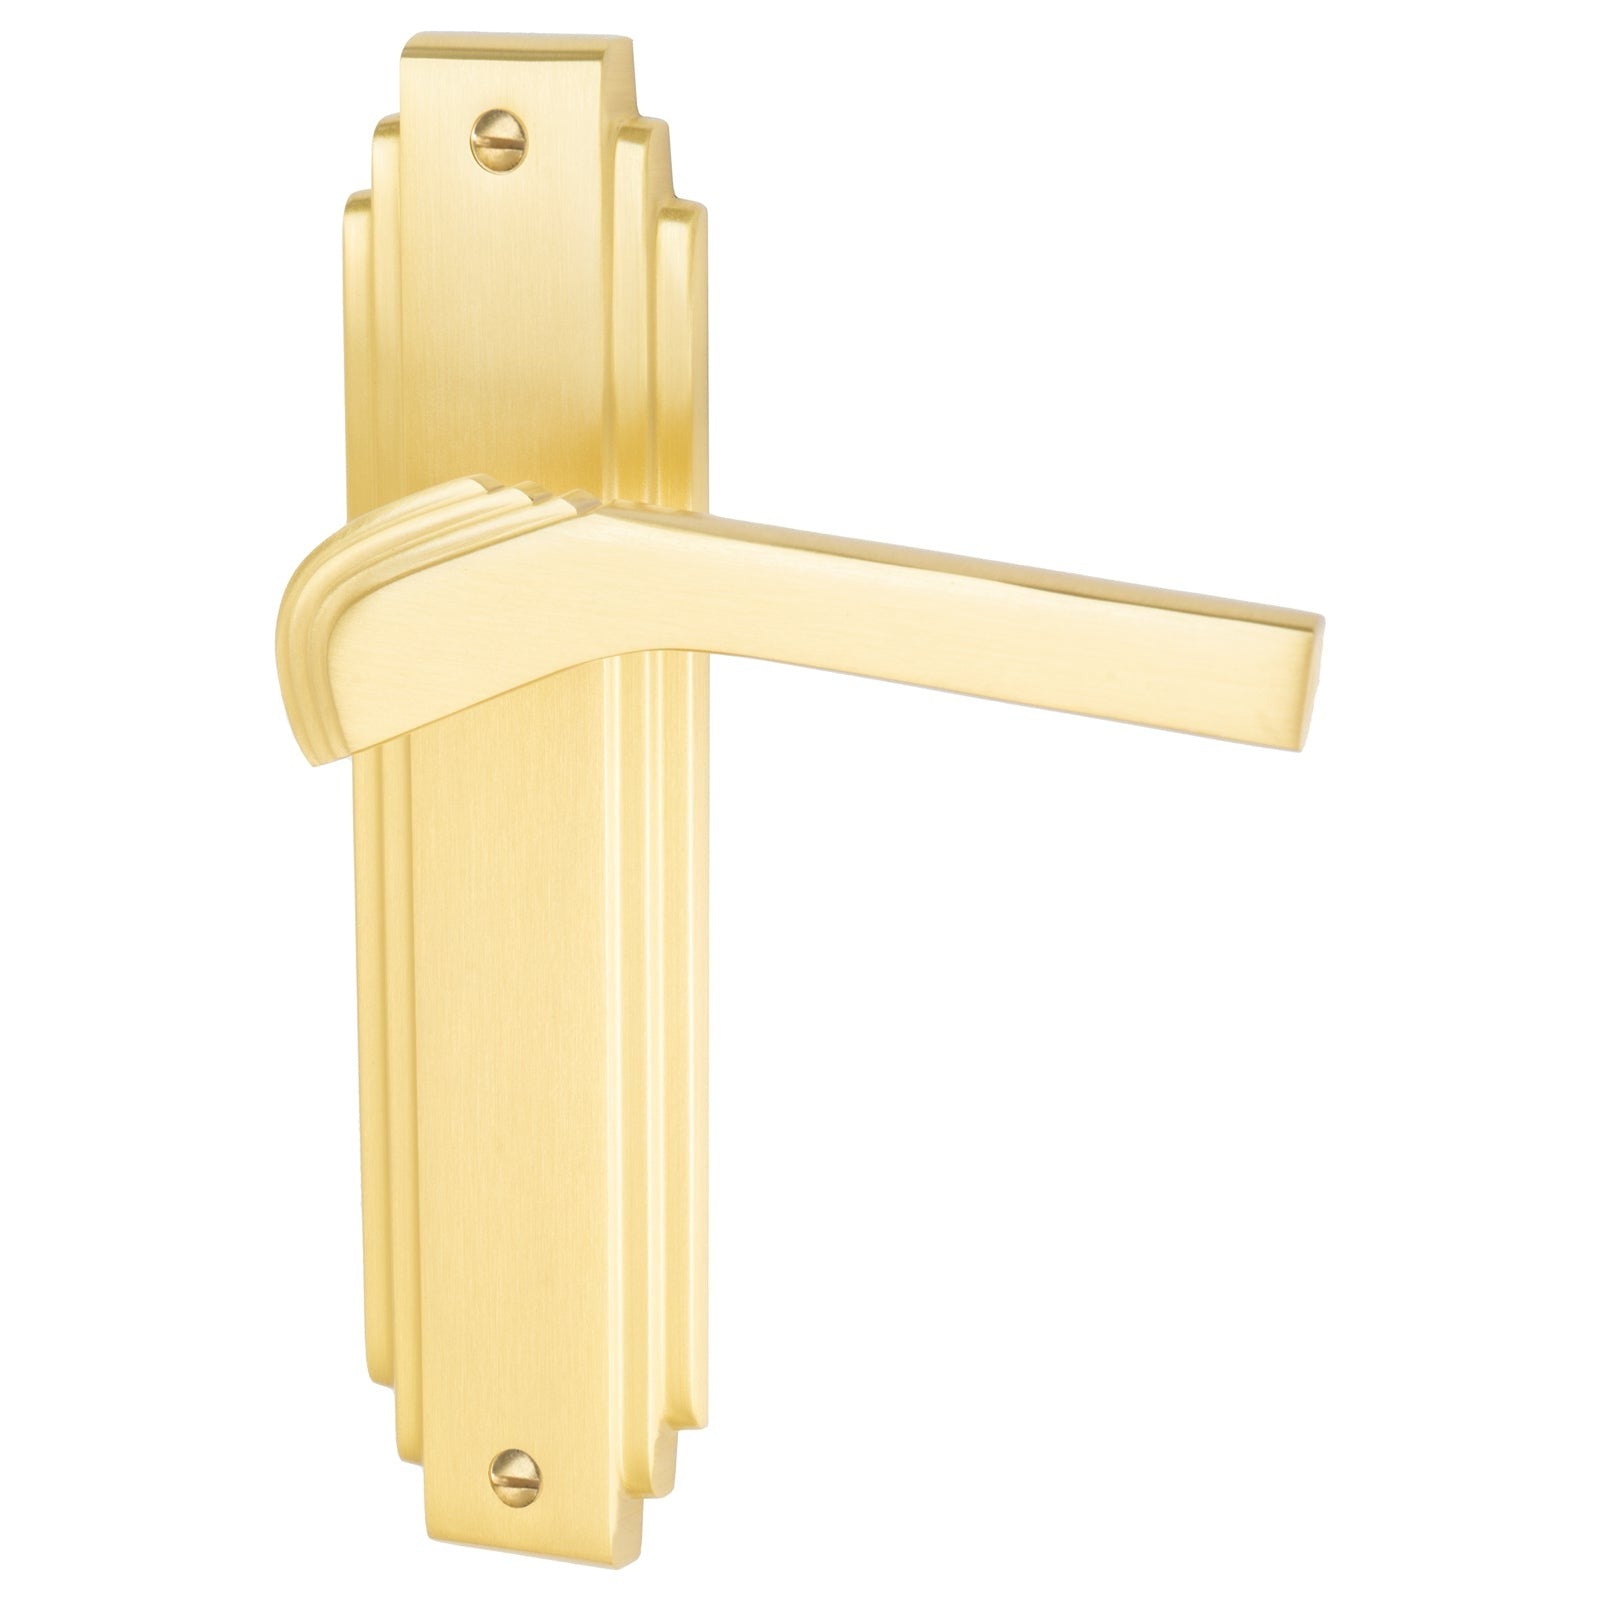 Tiffany Door Handles On Plate Latch Handle in Satin Brass SHOW